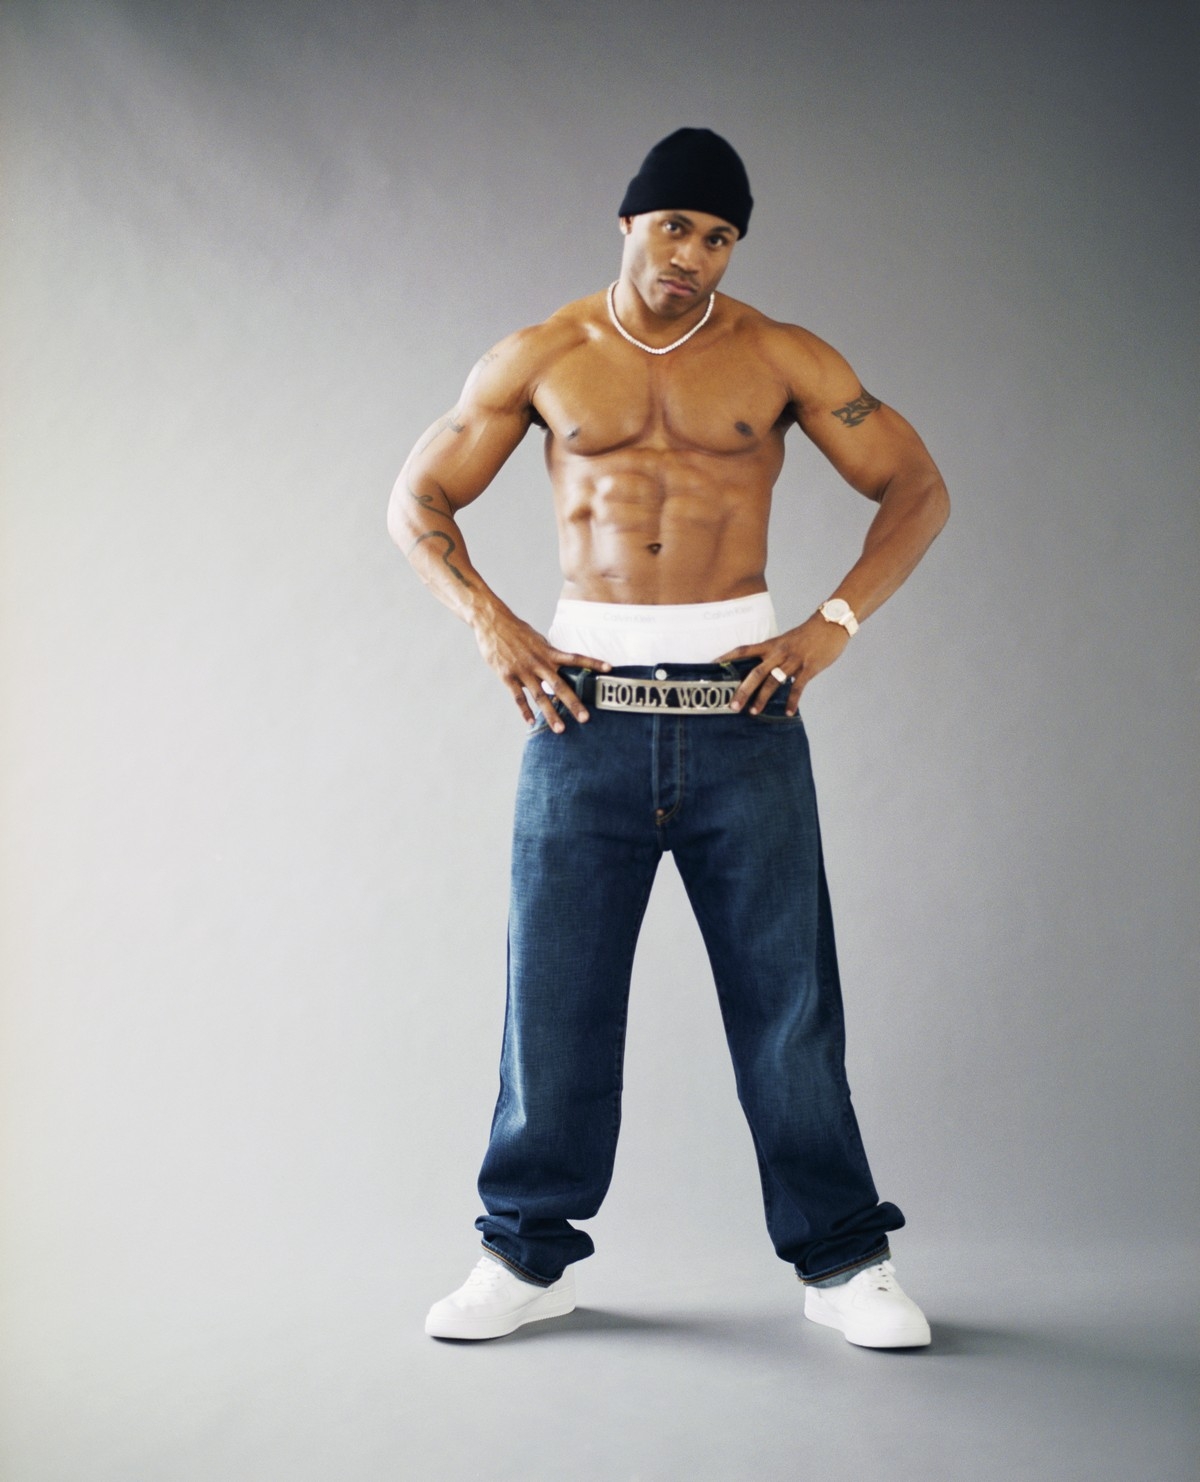 LL Cool J photo gallery - 50 best LL Cool J pics | Celebs-Place.com